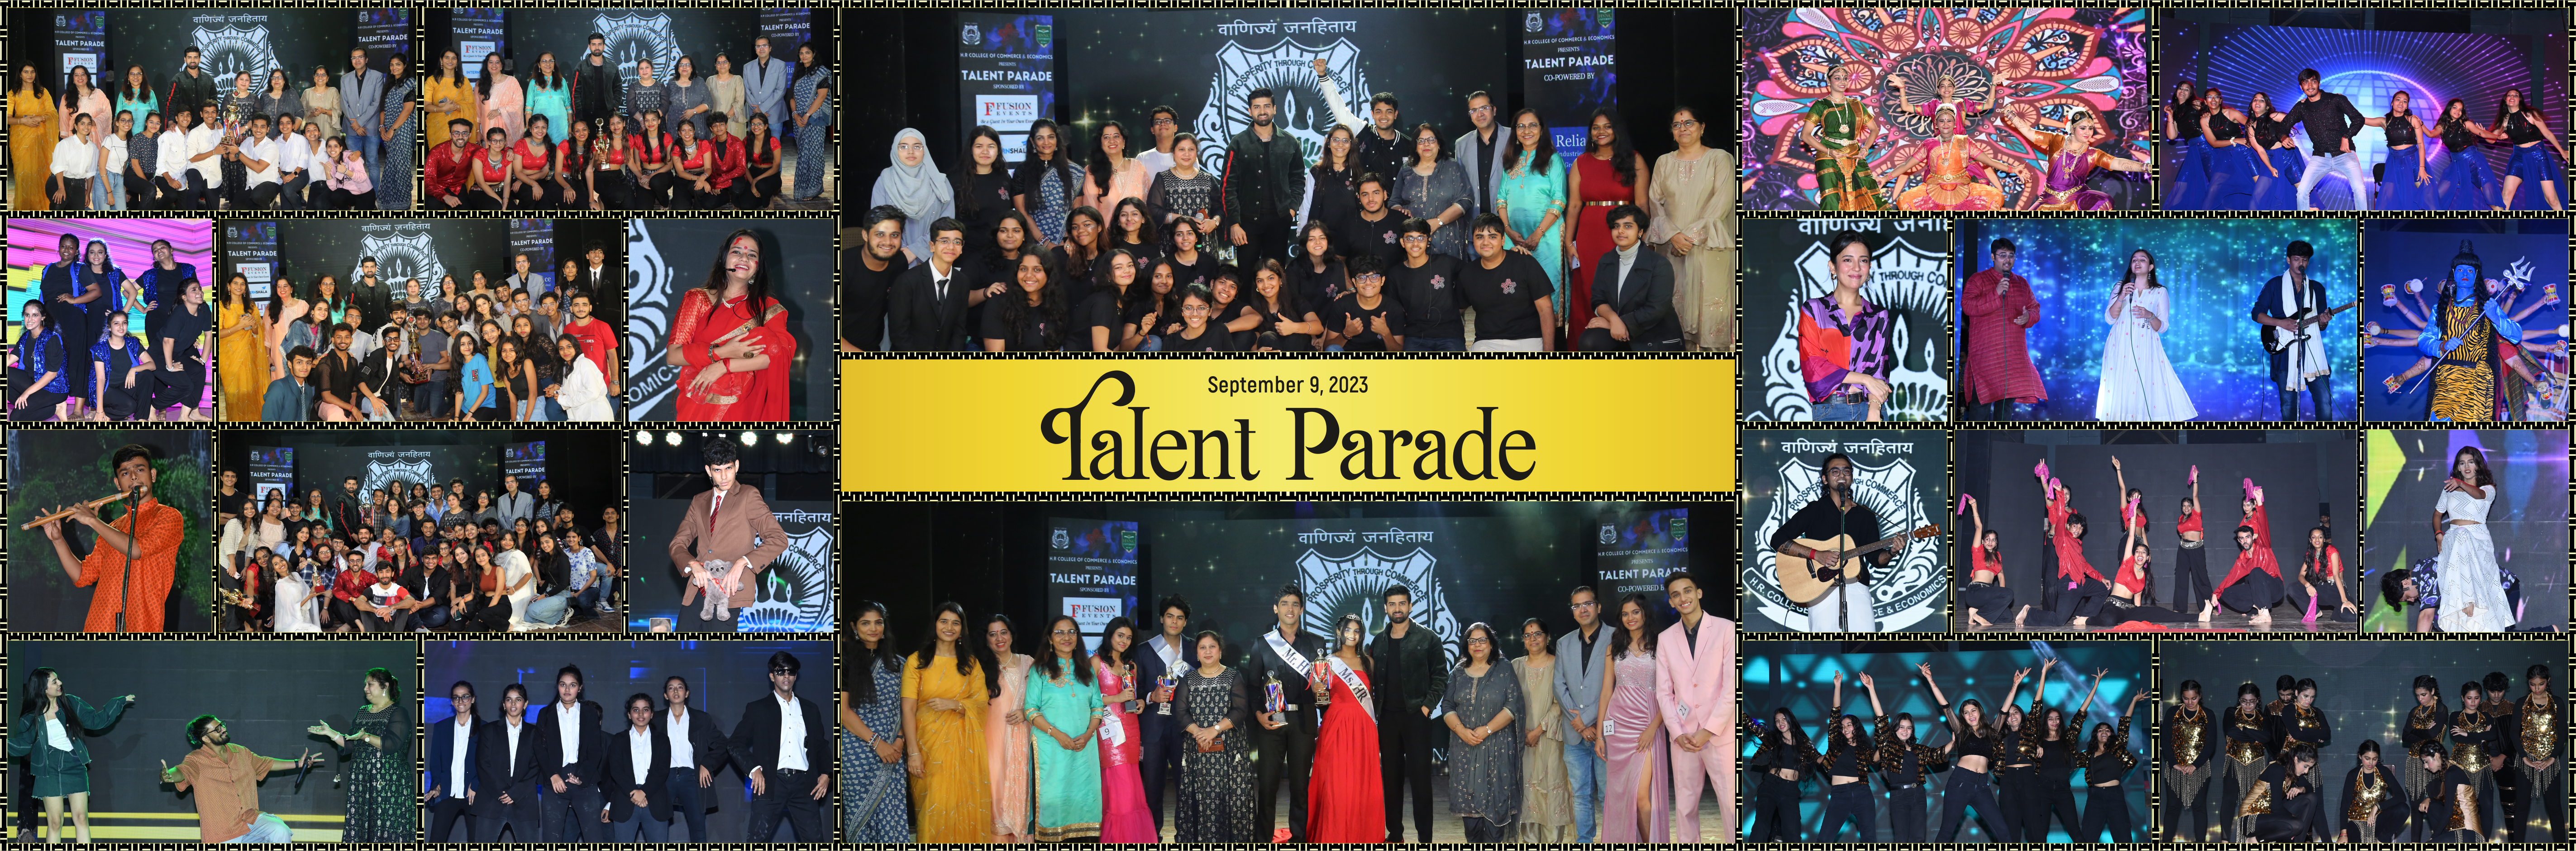 Talent Parade - September 9, 2023